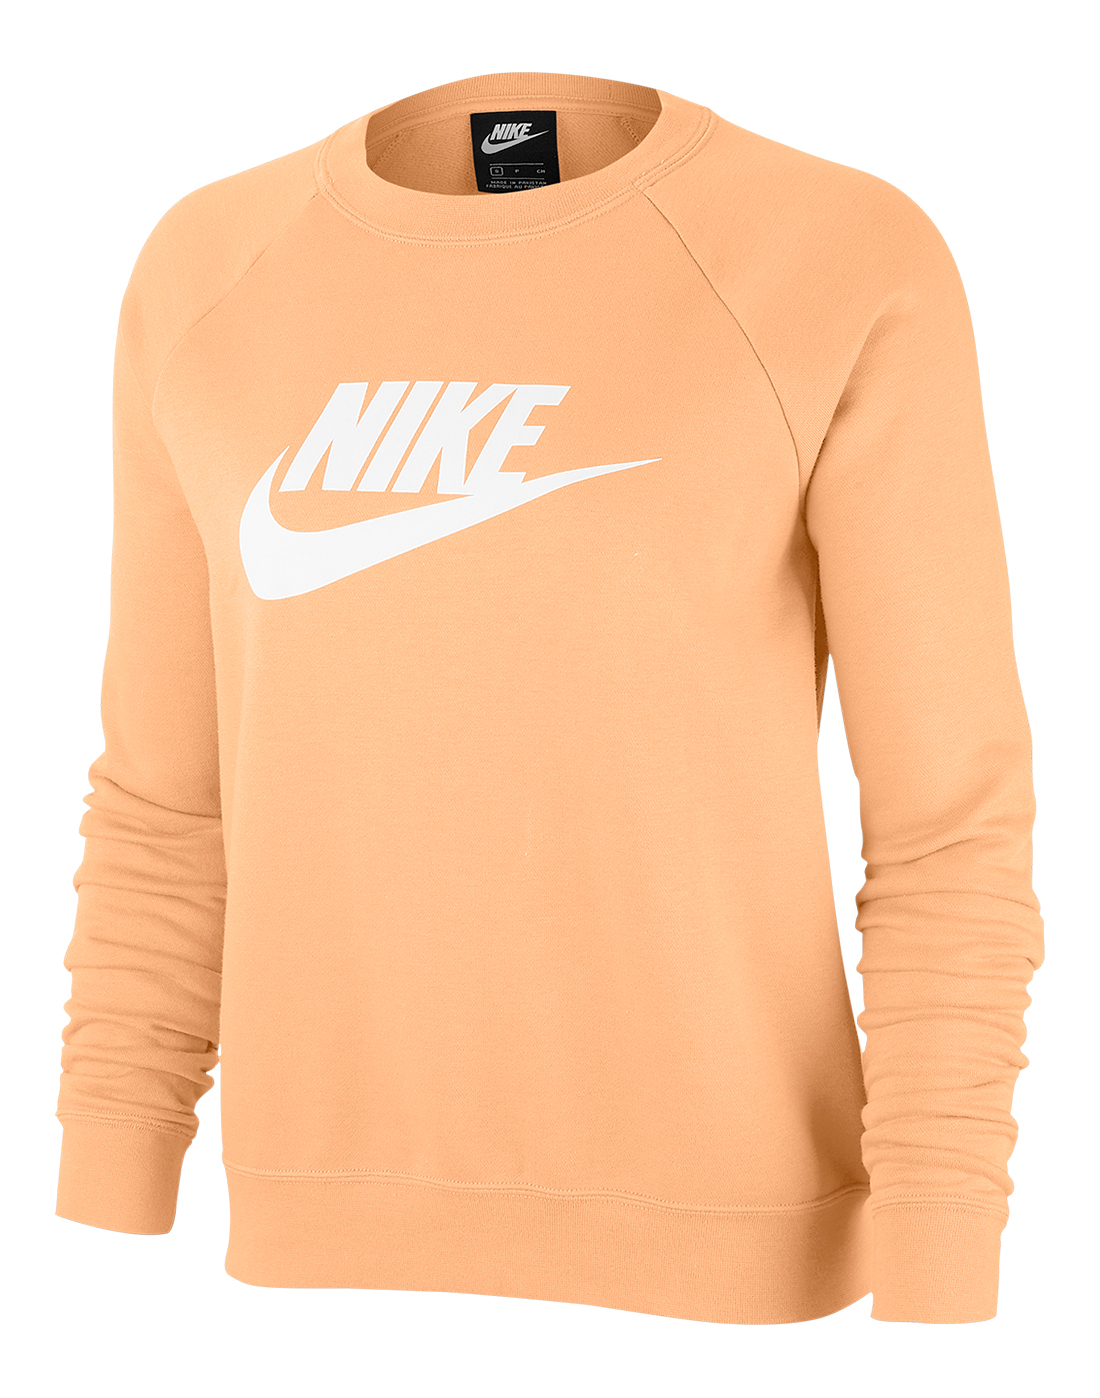 womens orange nike sweatshirt